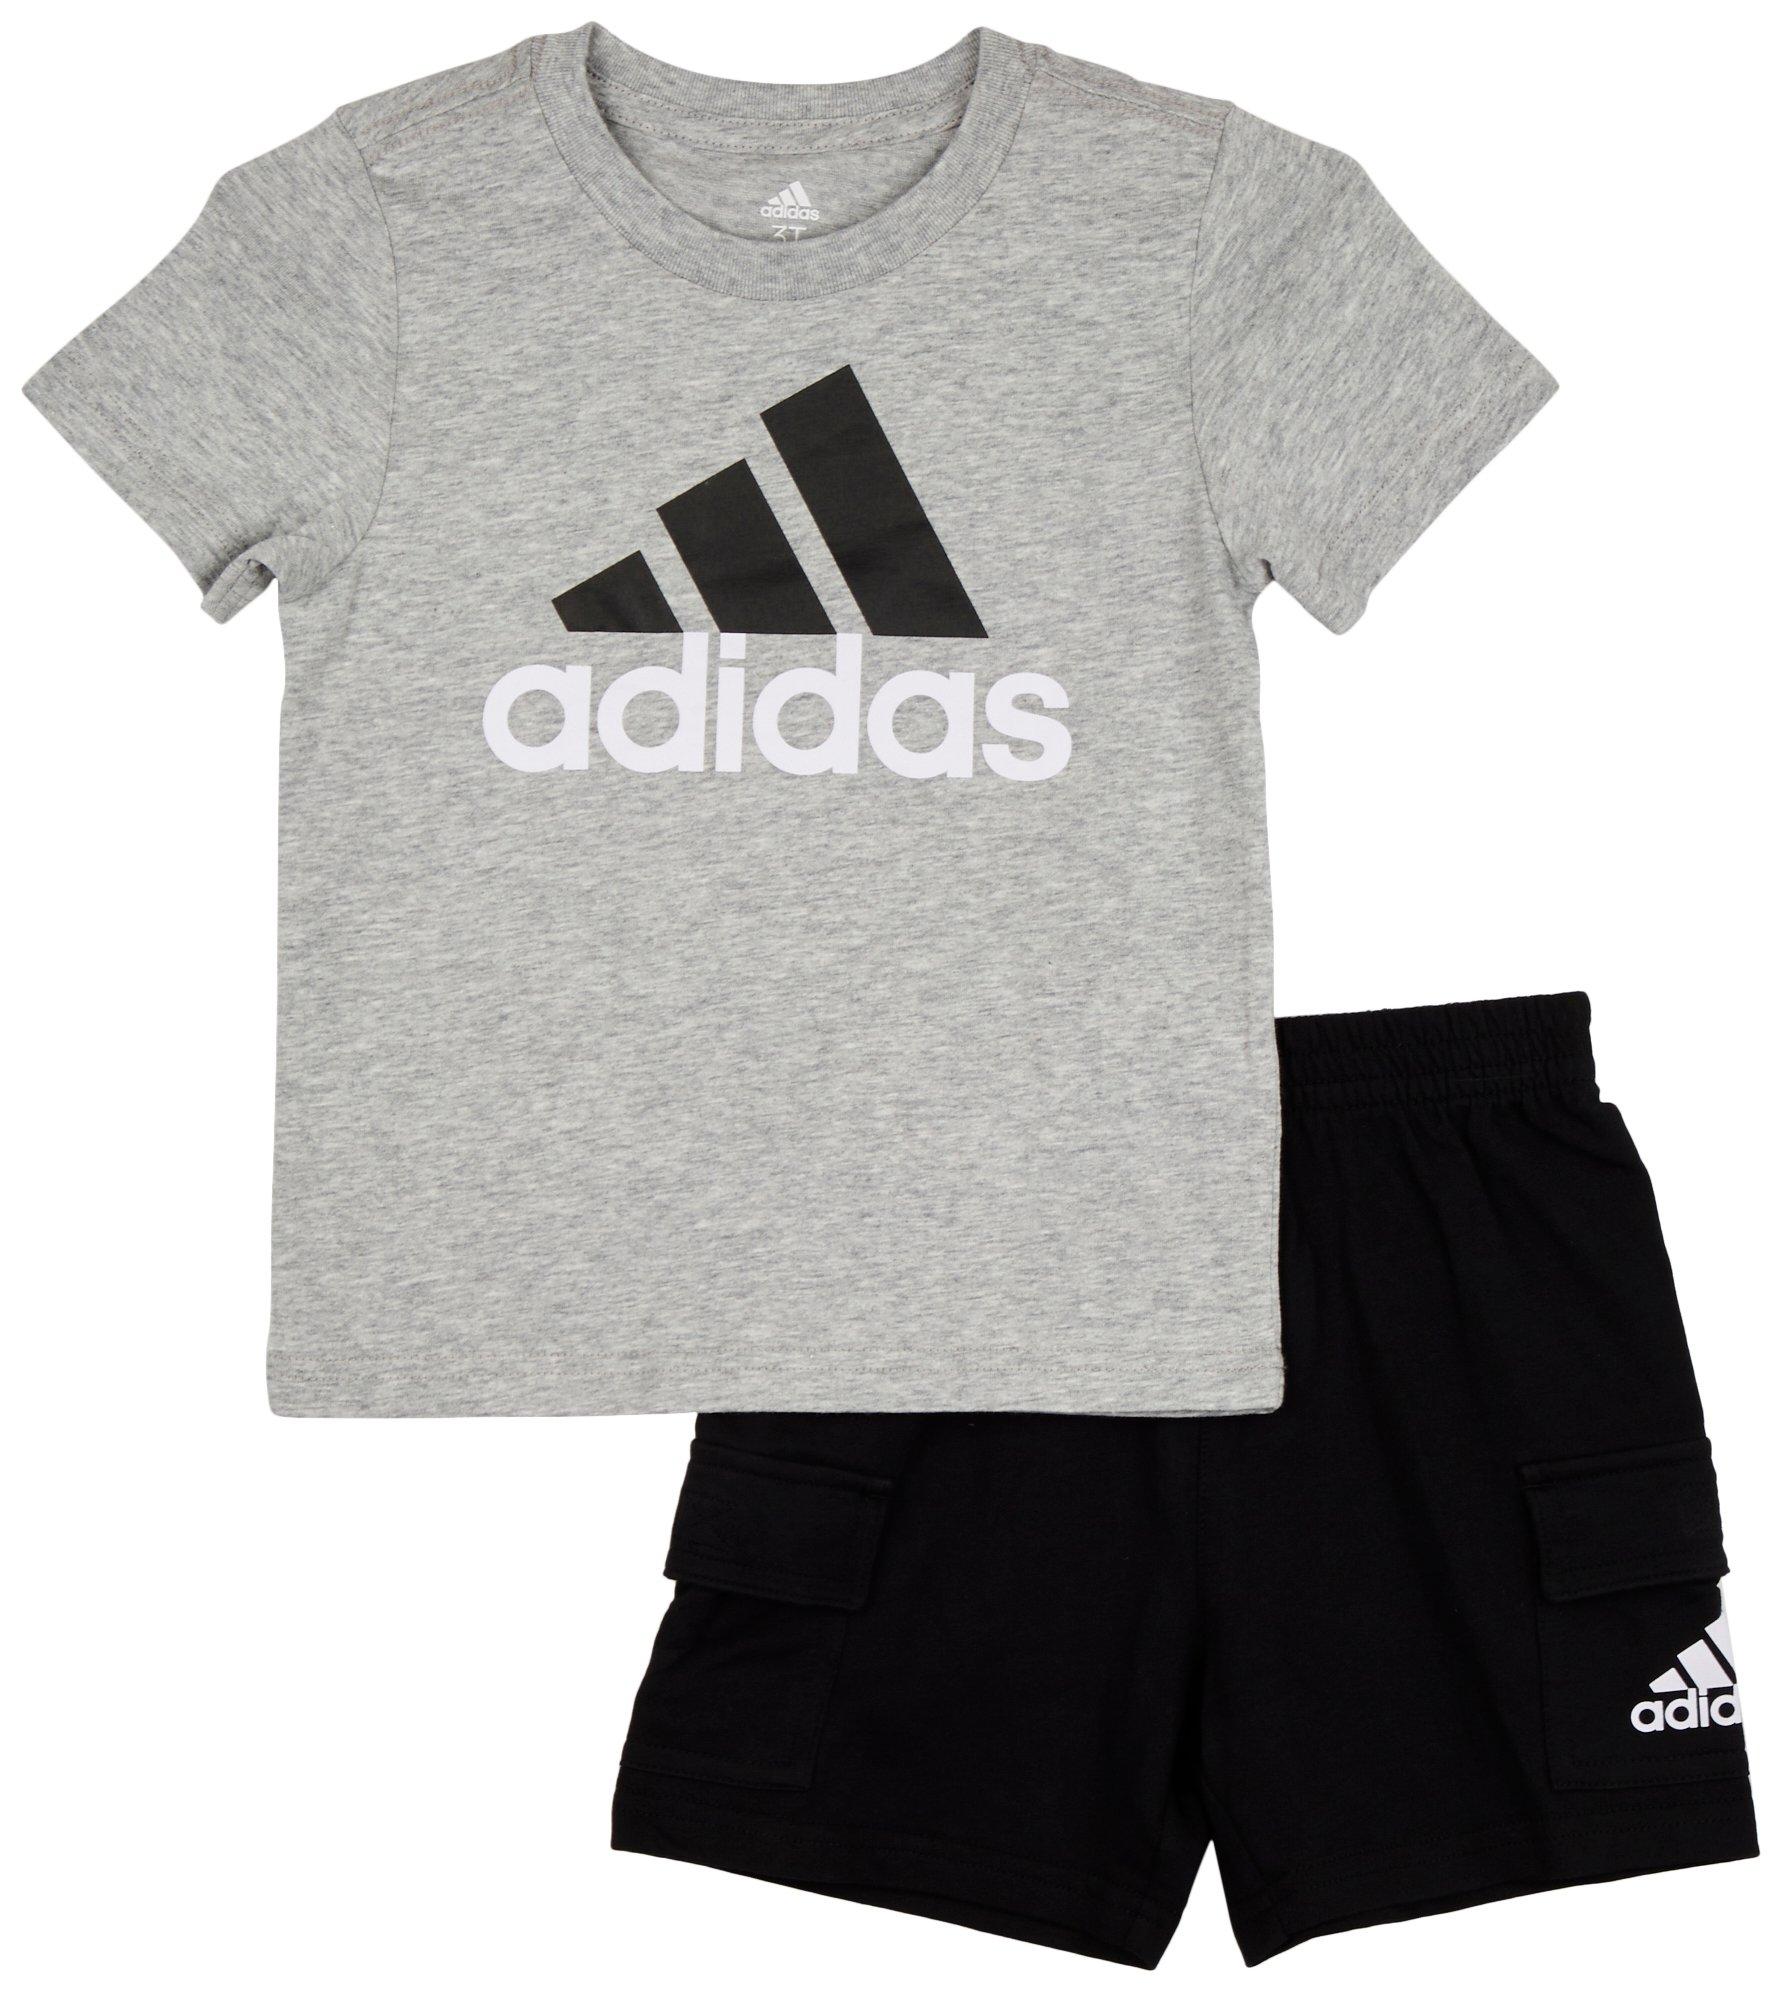 Adidas Toddler Boys 2-pc. French Terry Cargo Shorts